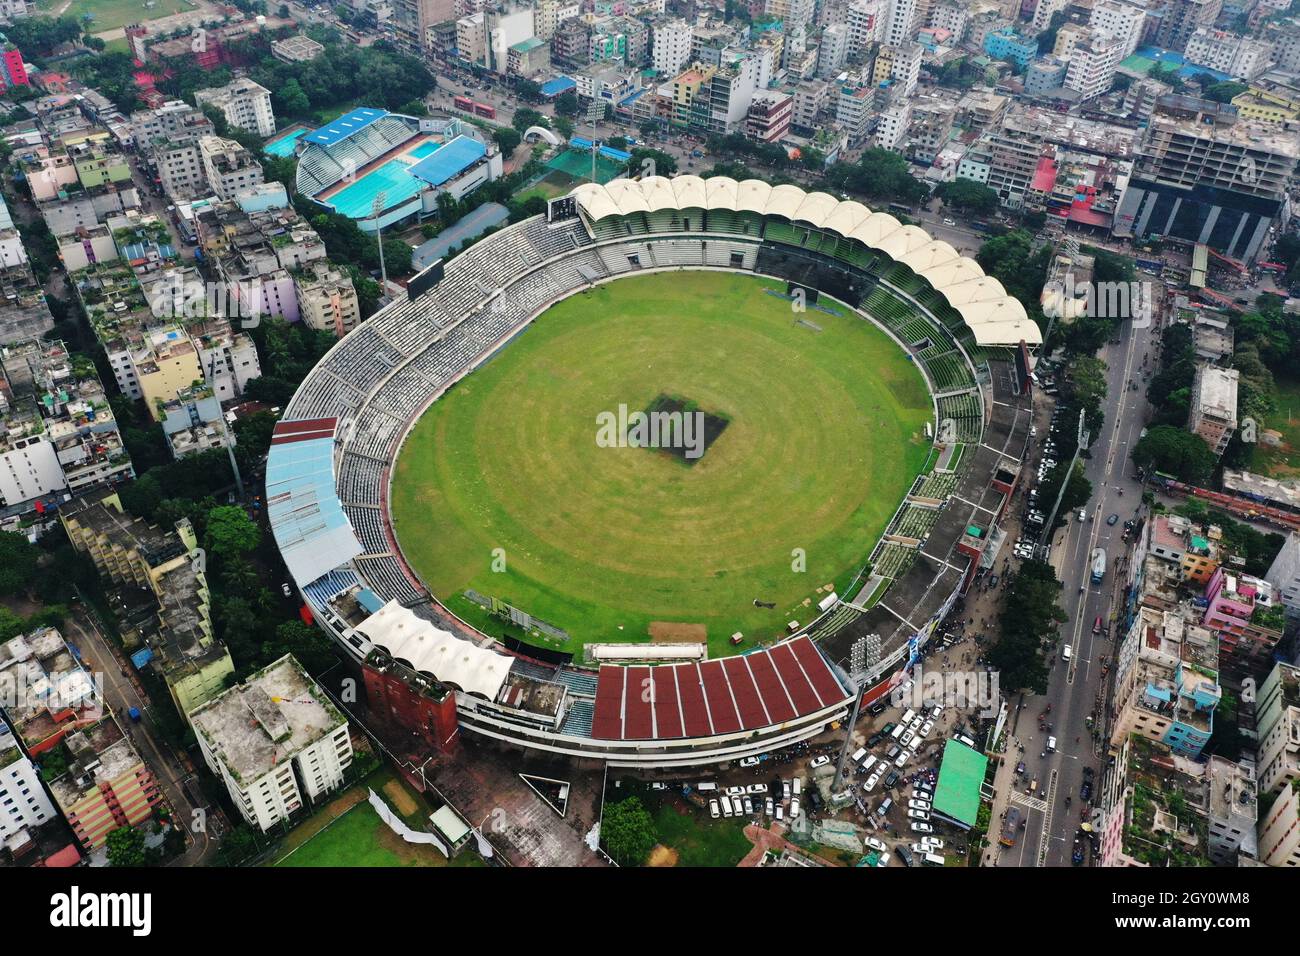 Dhaka, Bangladesh - October 06, 2021: The Sher-e-Bangla National Cricket Stadium, also called Mirpur Stadium, is an International cricket ground in Dh Stock Photo